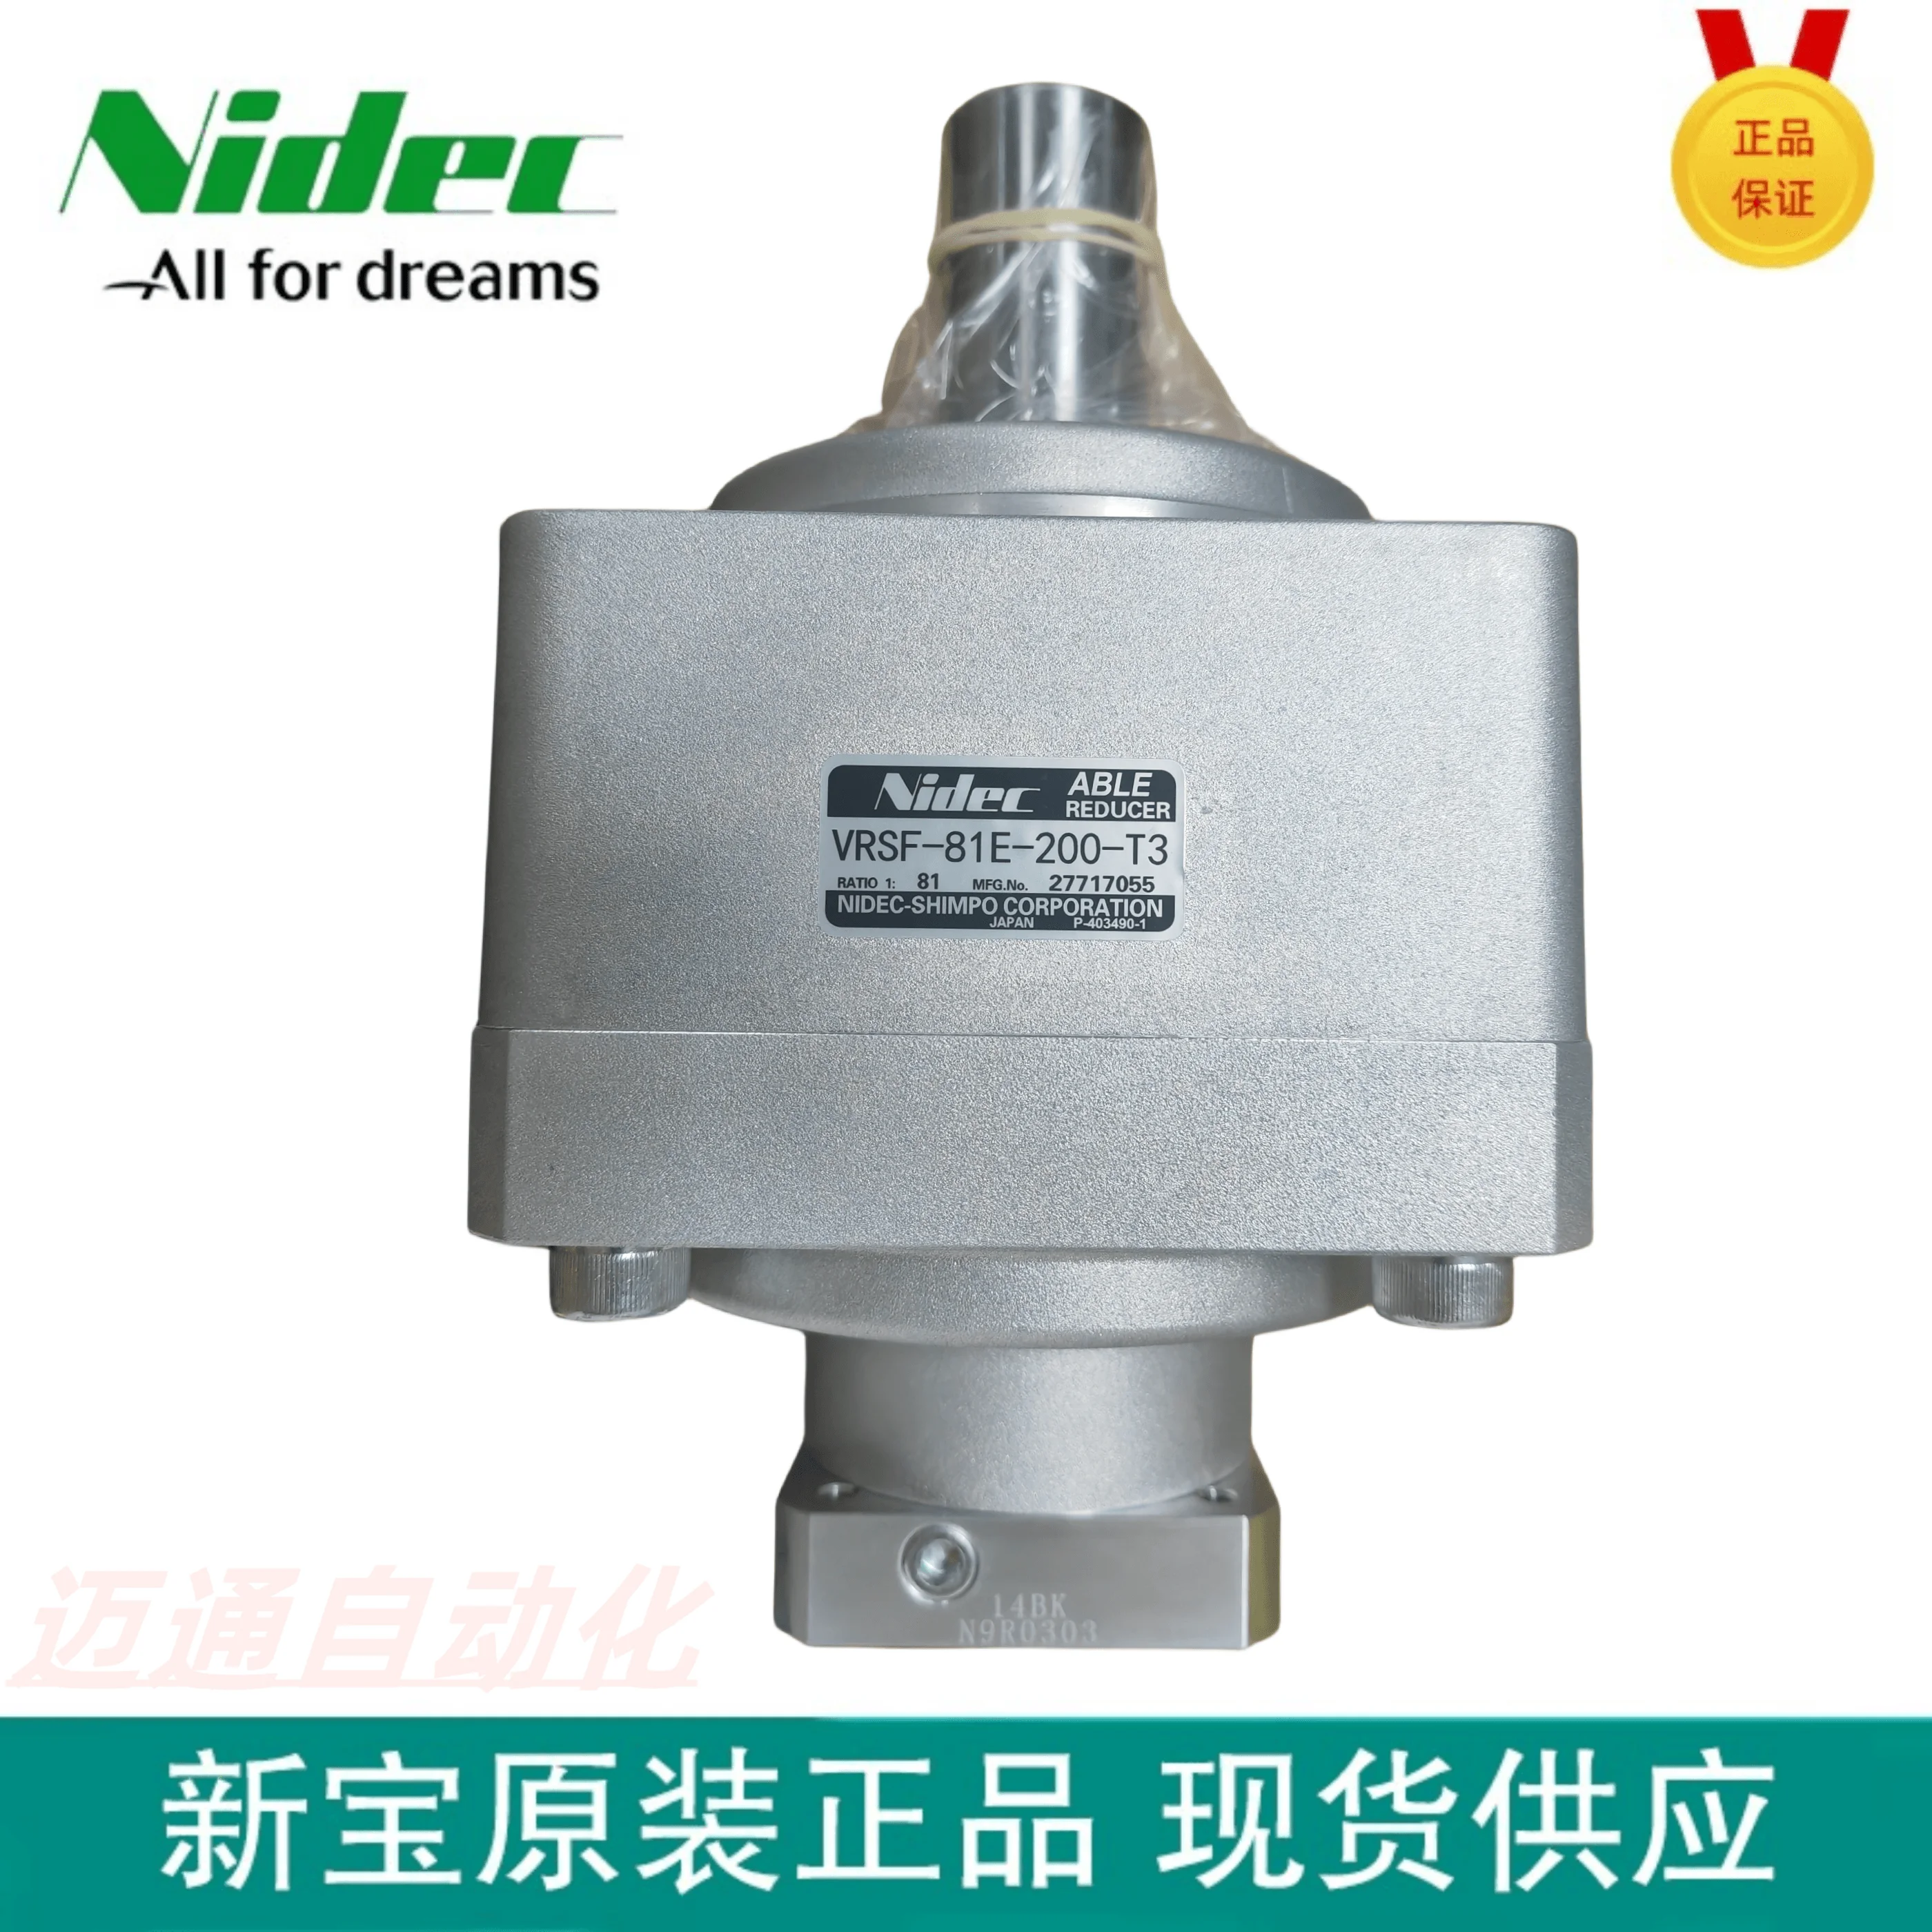 

VRSF-81E-200-T3 NIDEC/SHIMPO High-precision Reducer Spot Sales